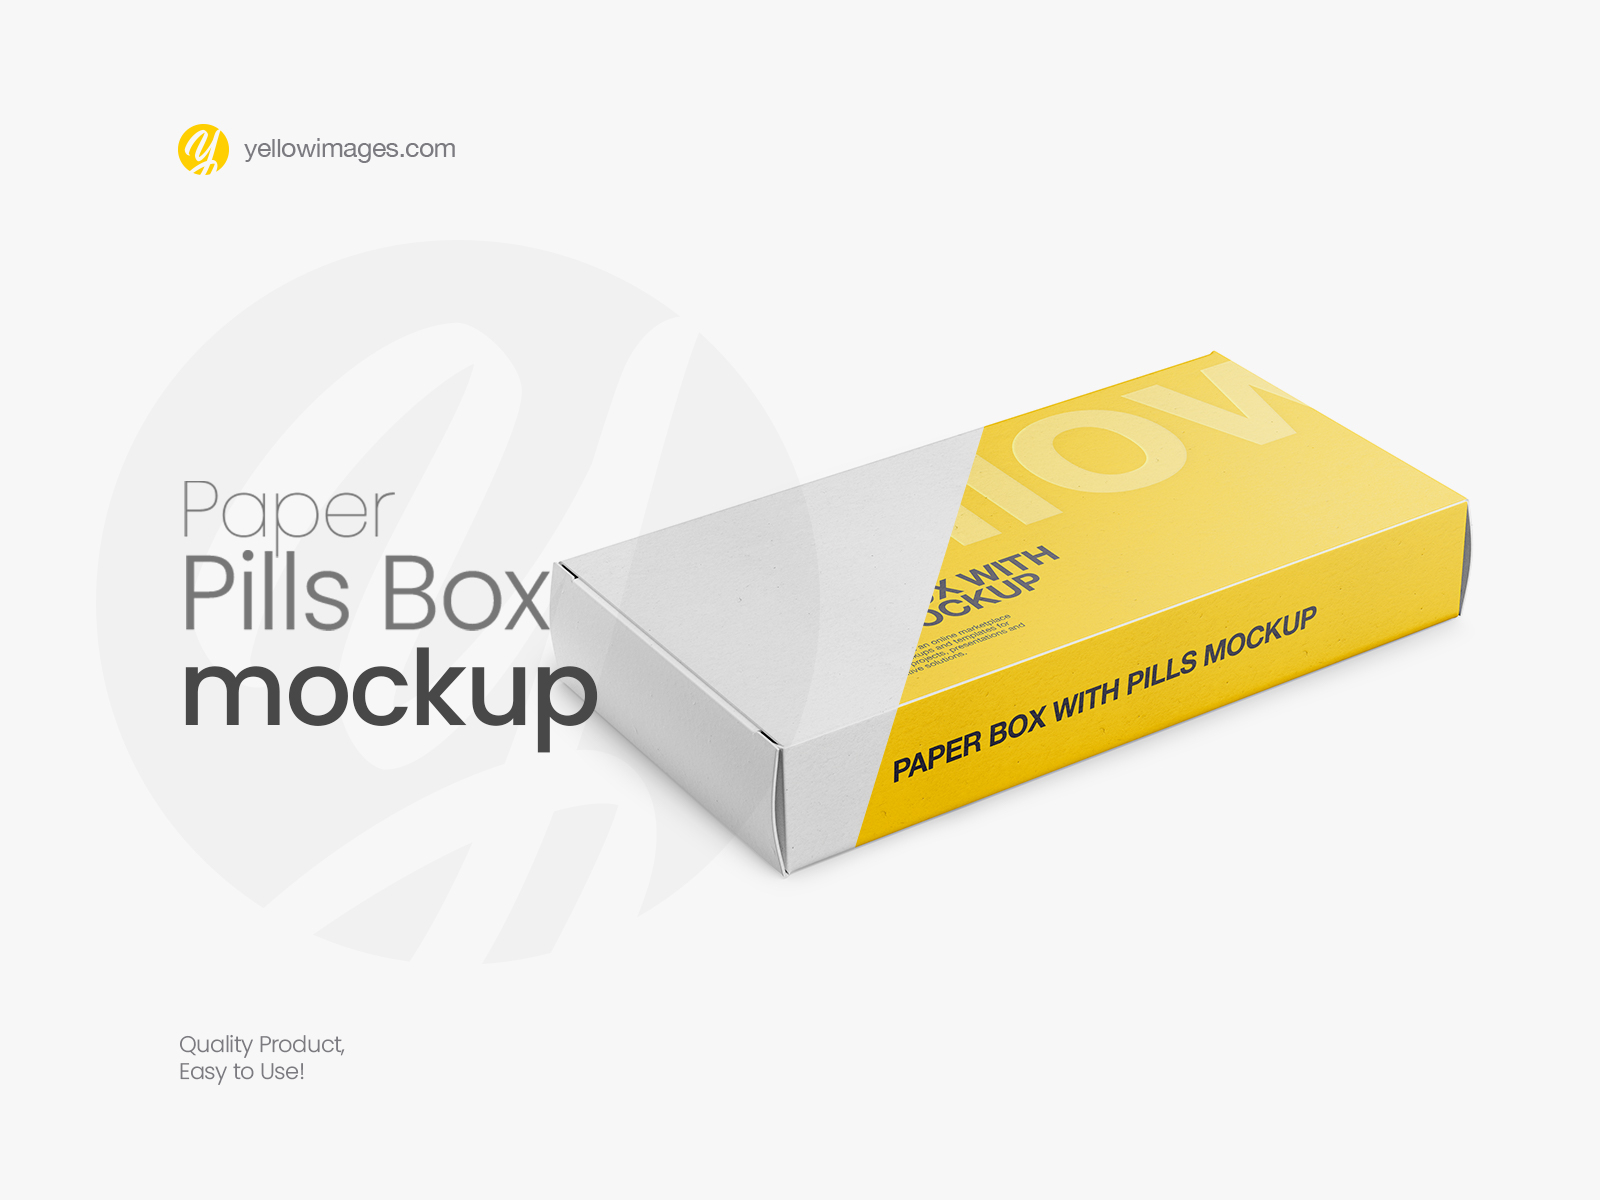 Download Paper Pills Box Mockup - Halfside View by Dmytro Ovcharenko on Dribbble